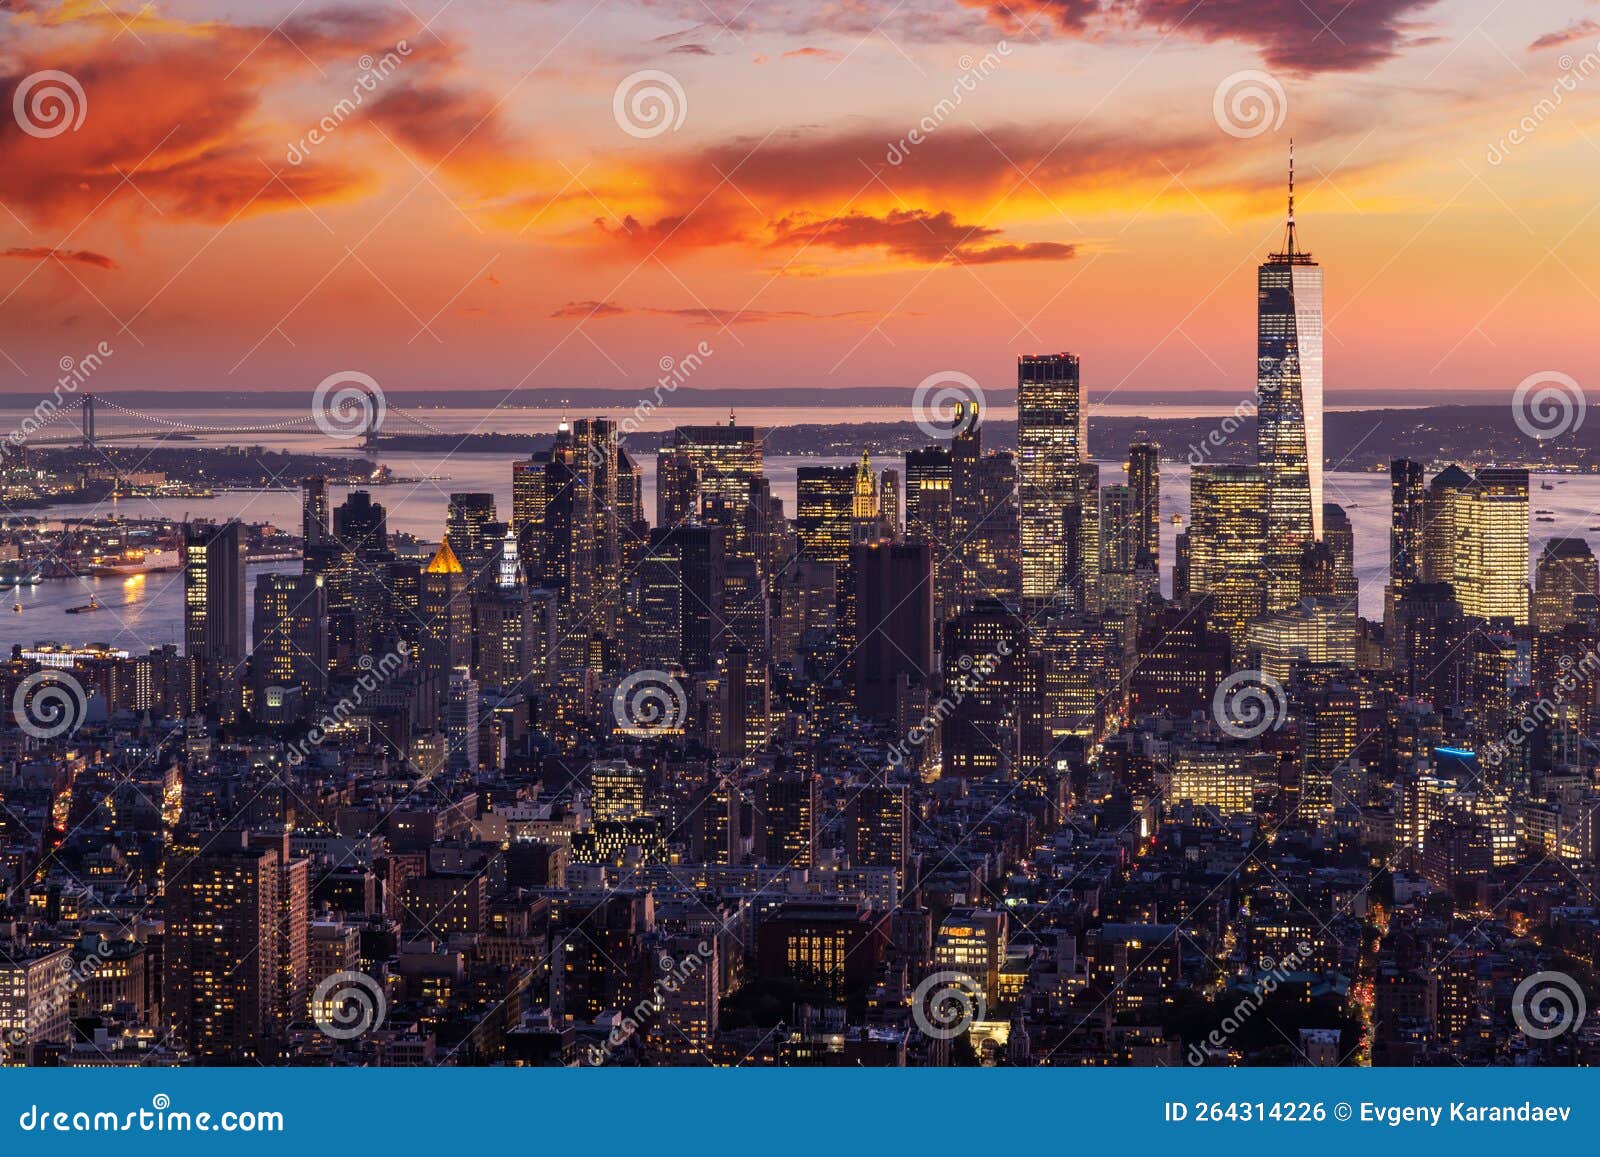 1. "New York City Skyline Nail Art Tutorial" - wide 6